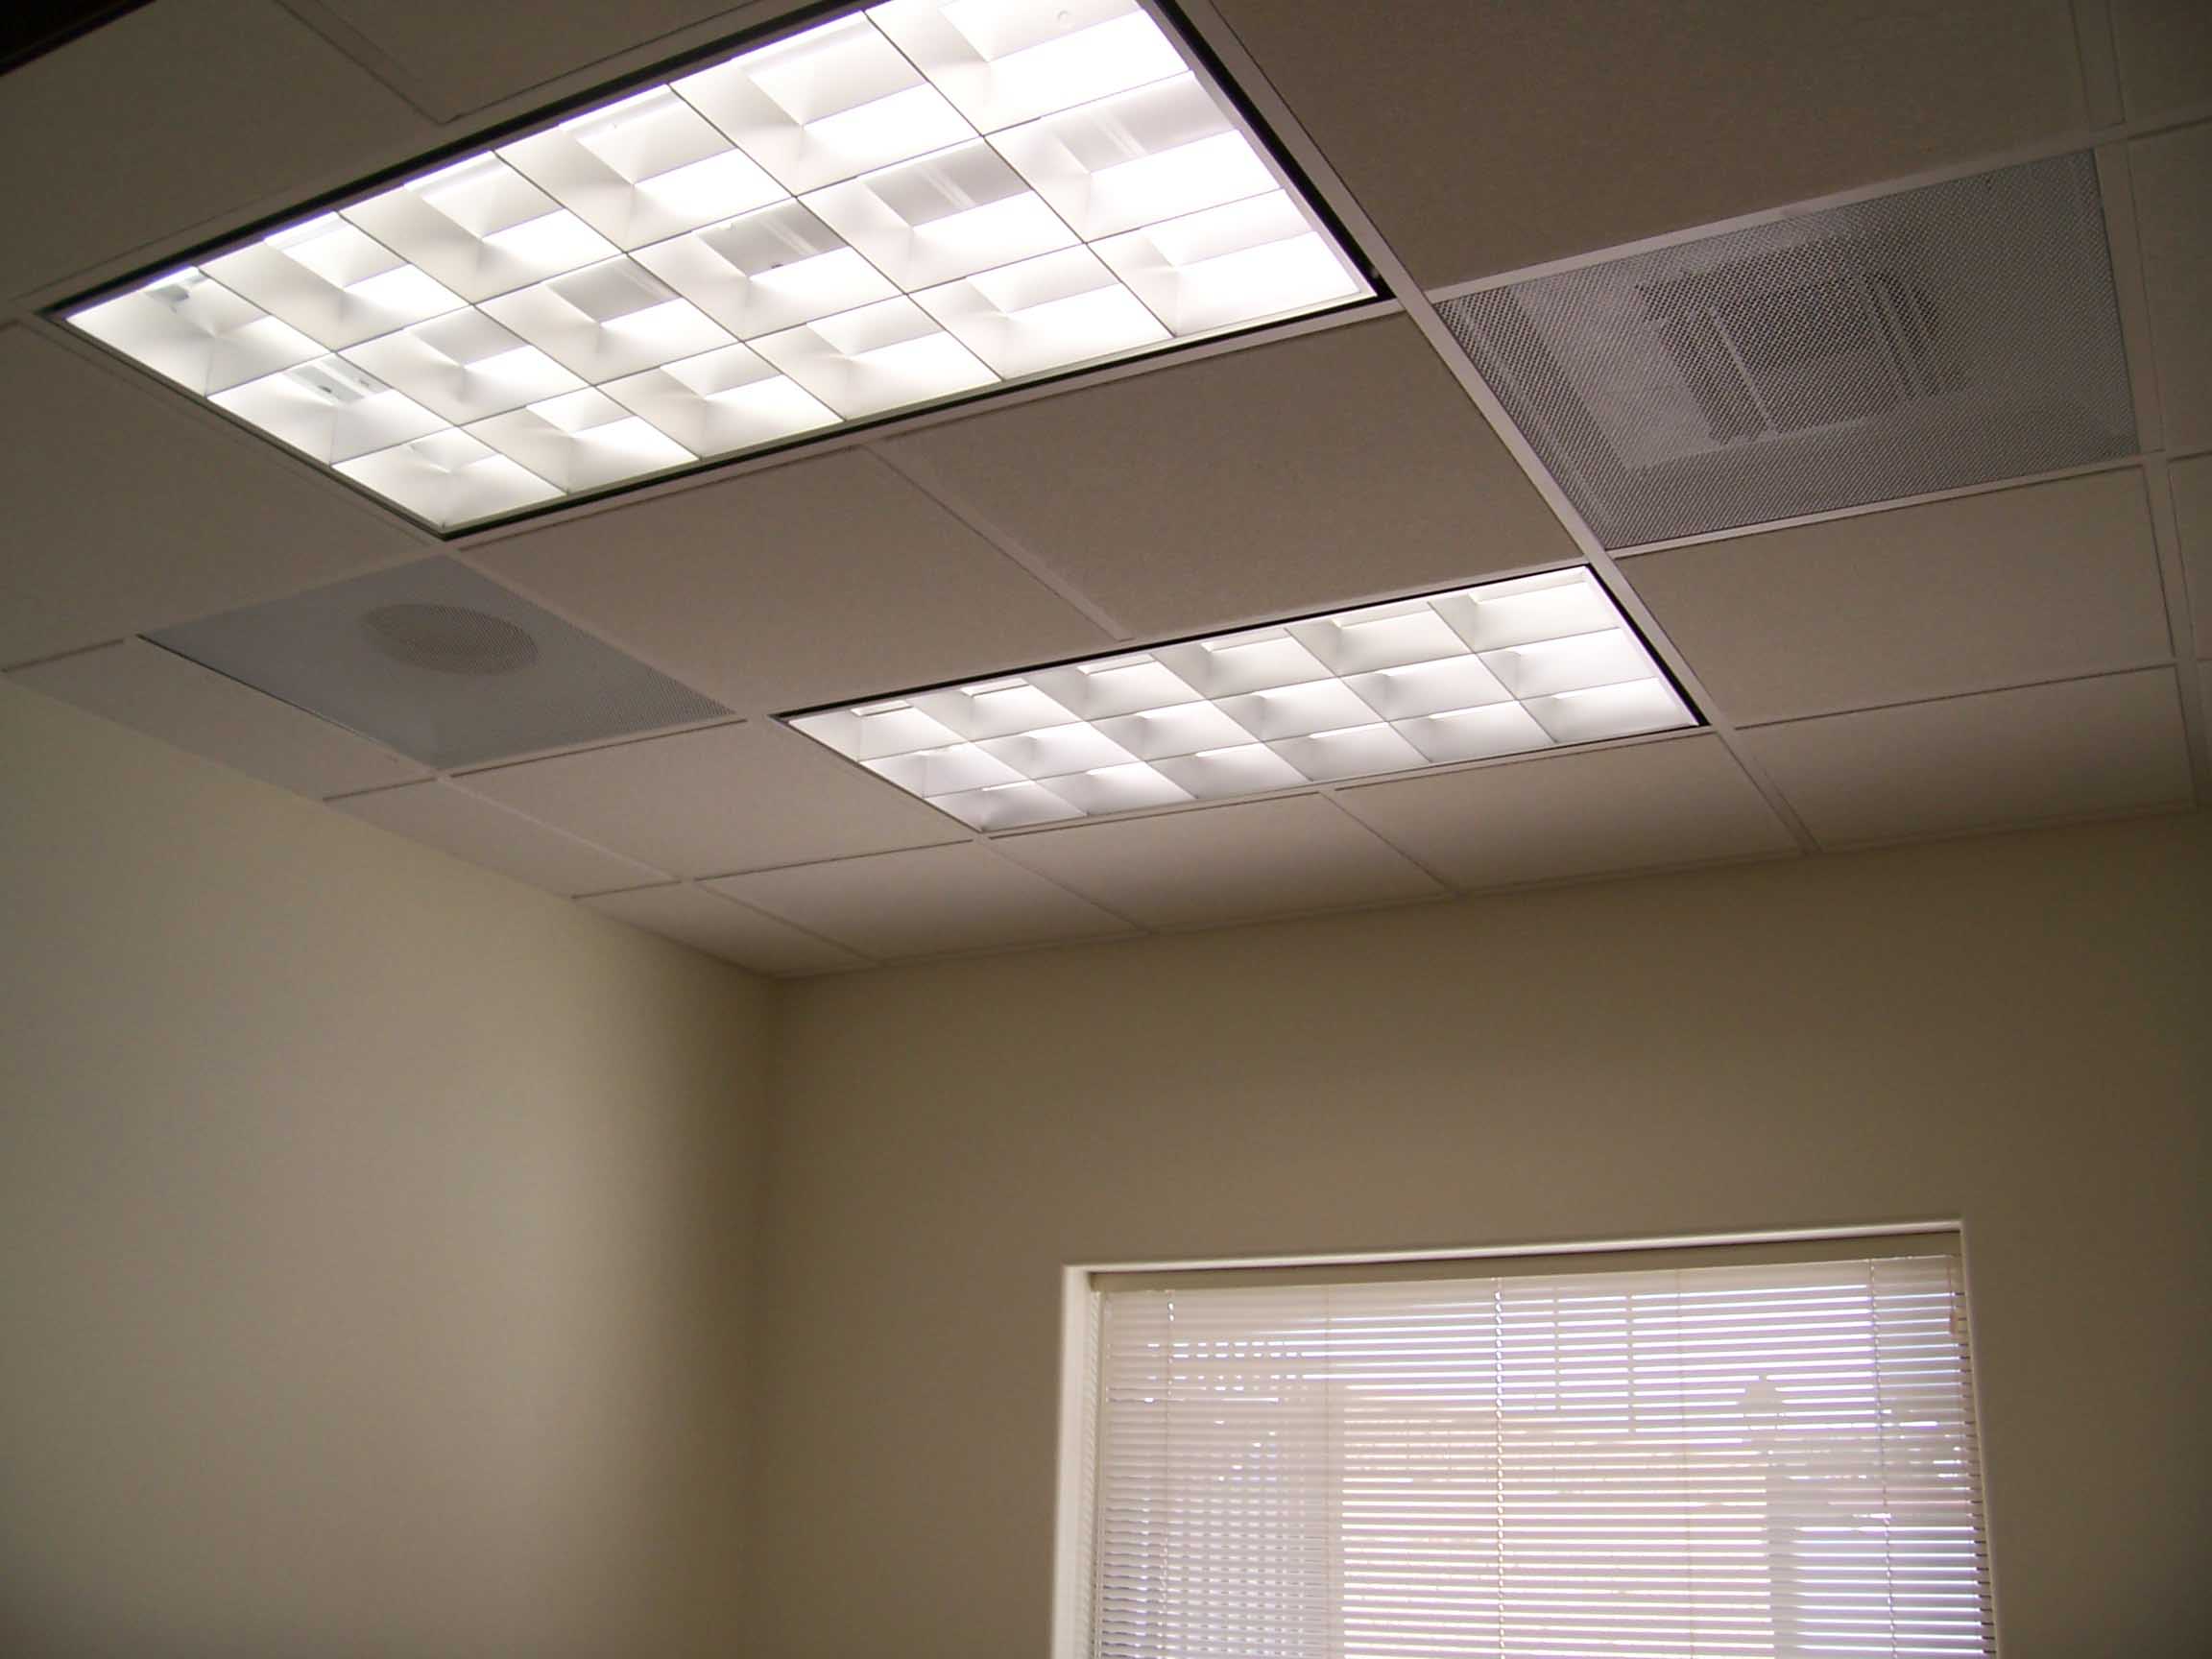 10 benefits of Fluorescent light ceiling panels - Warisan Lighting